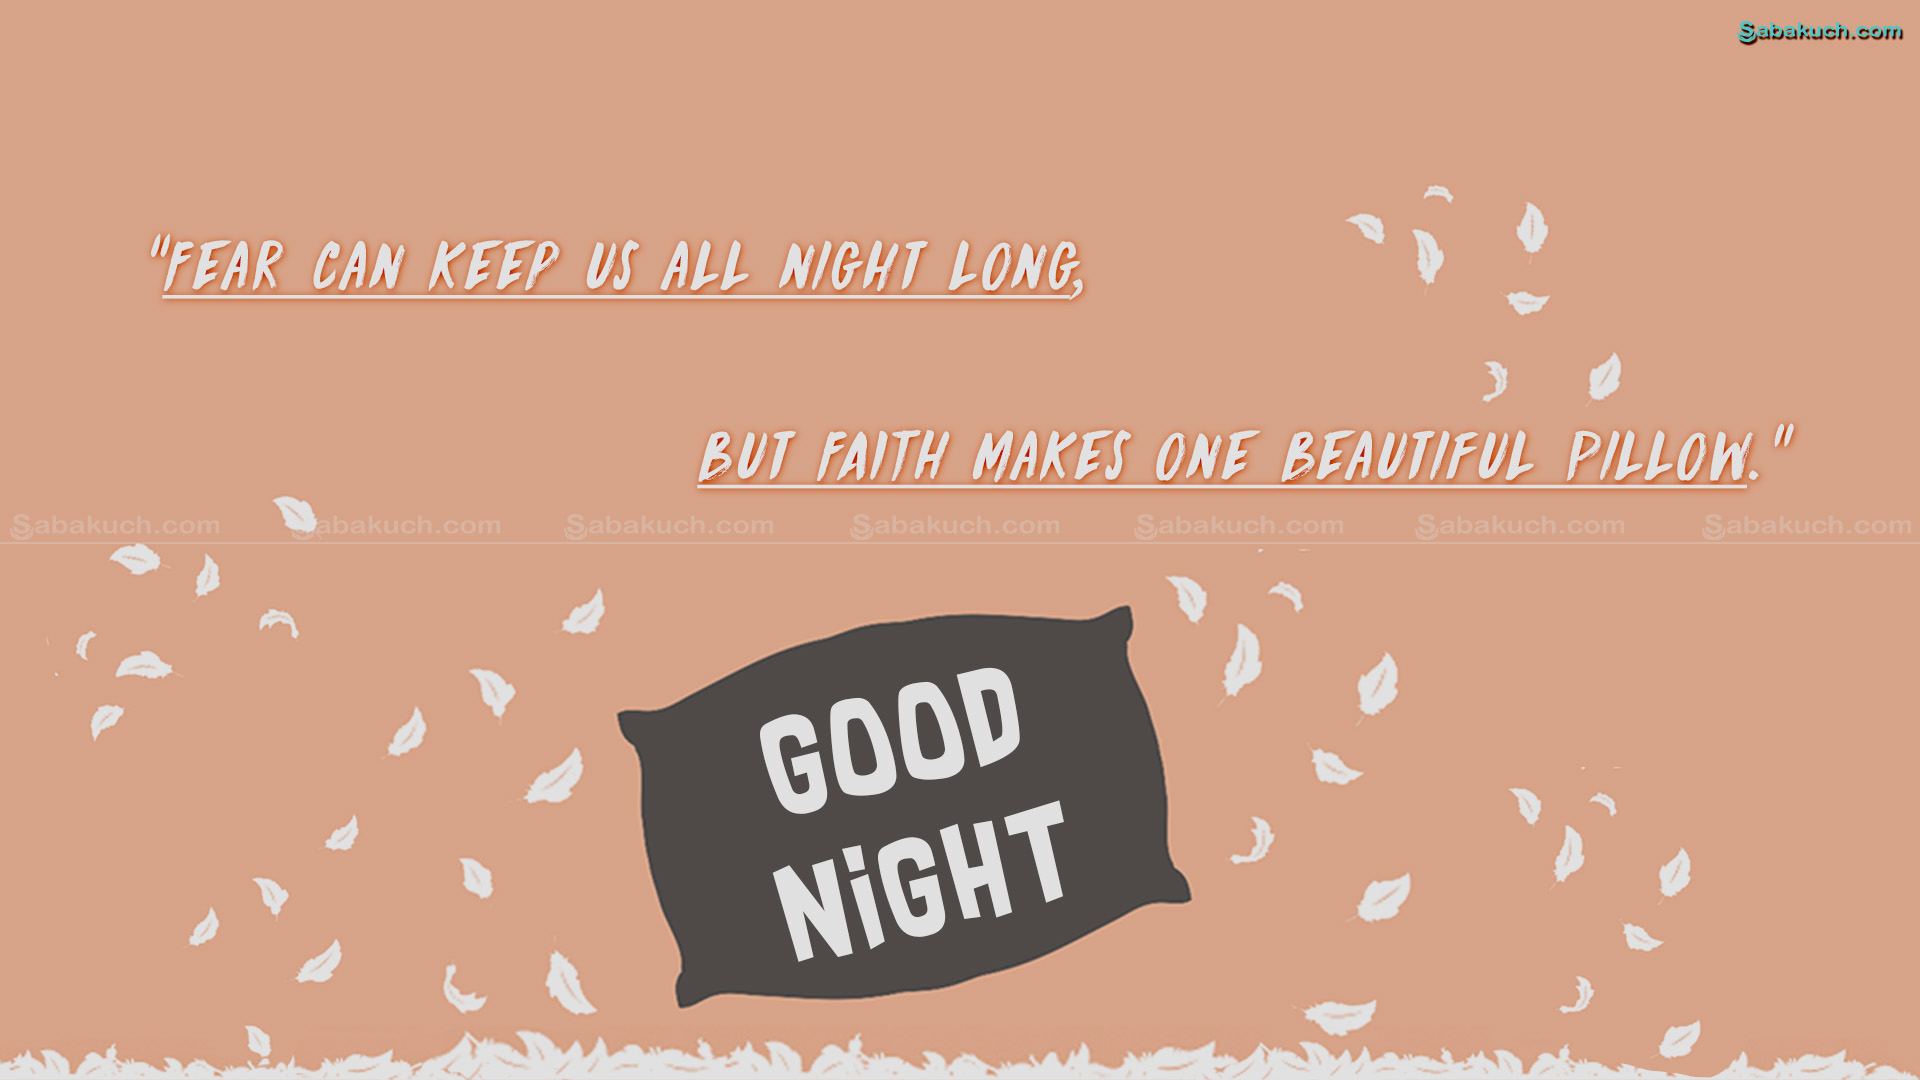 Sabakuch Blog Goodnight Wallpaper - Good Night Images All Types - HD Wallpaper 